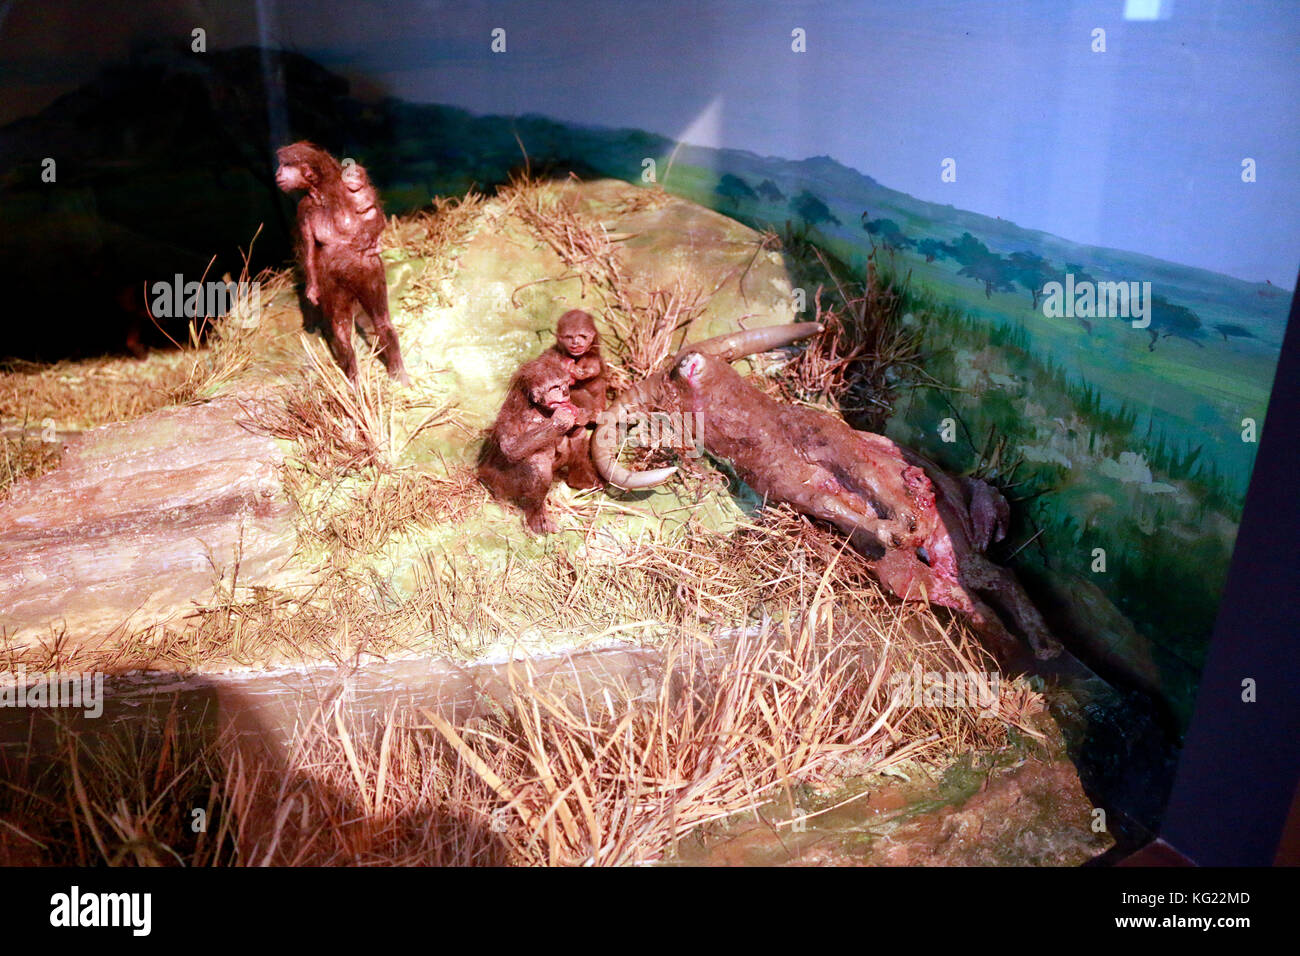 Menschen der steinzeit, evtl. neandertaler, Berlín. Foto de stock